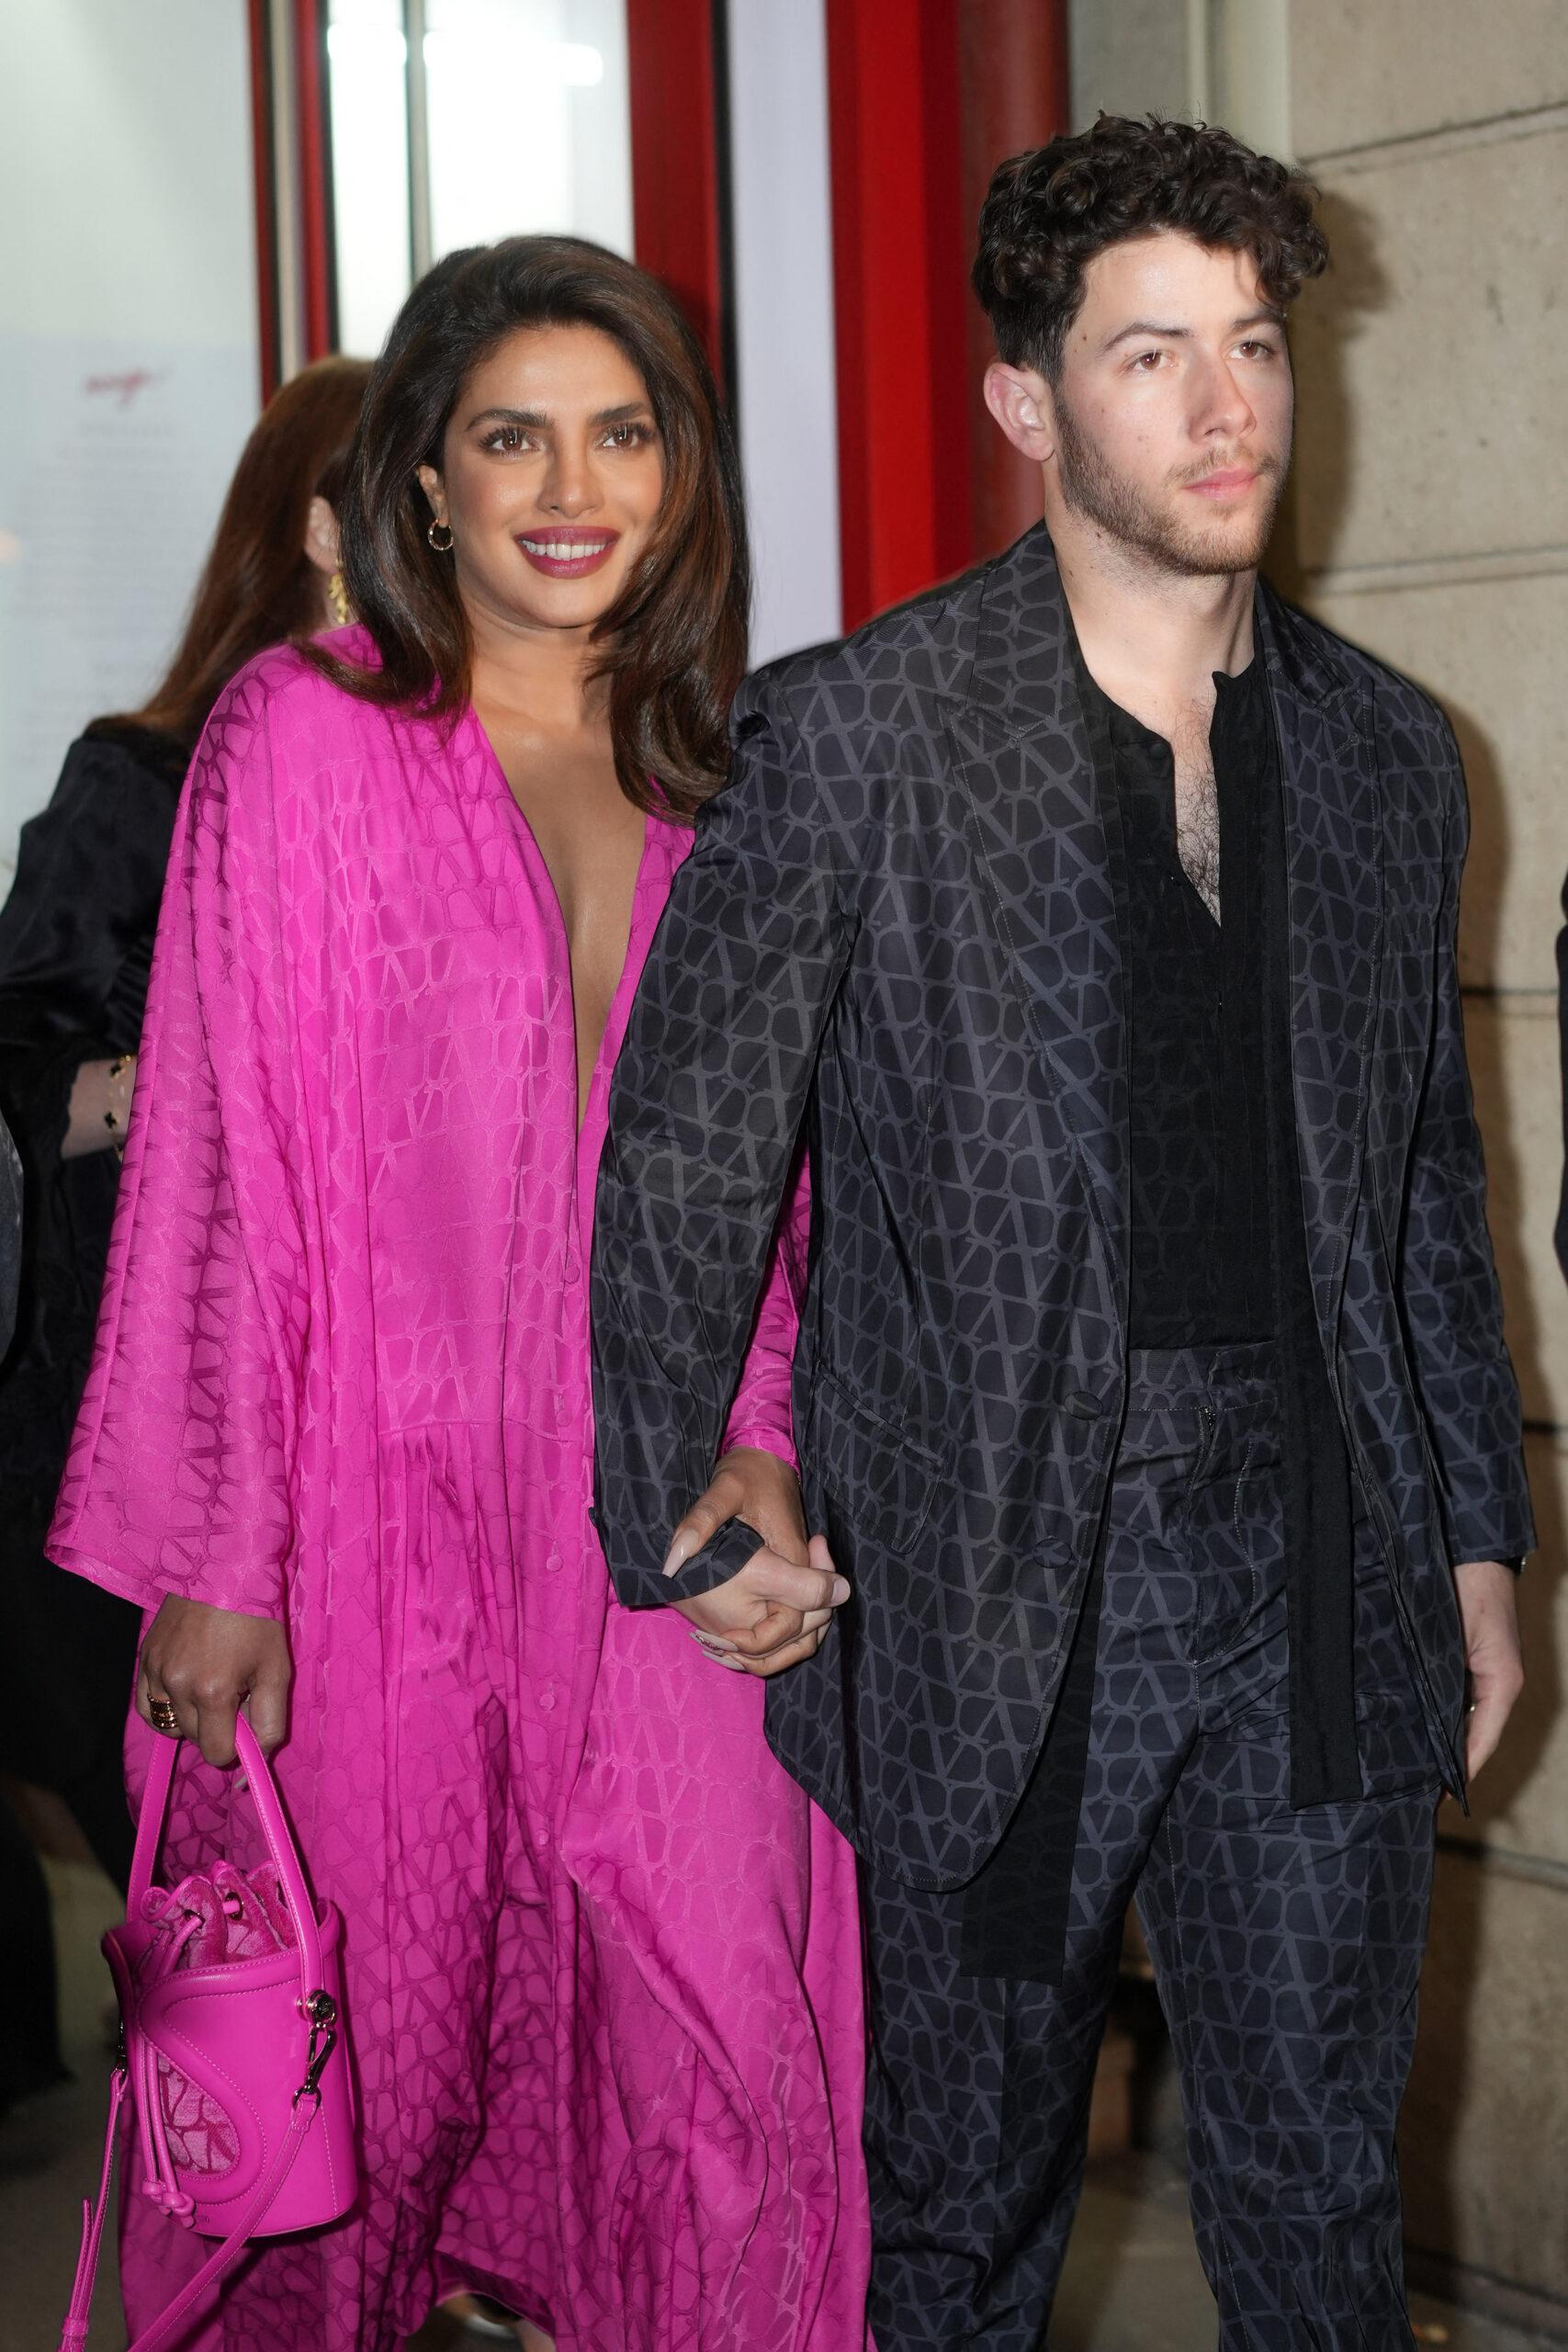 Nick Jonas and Wife Priyanka Chopra on The run in Paris After Valentino Late Night Show